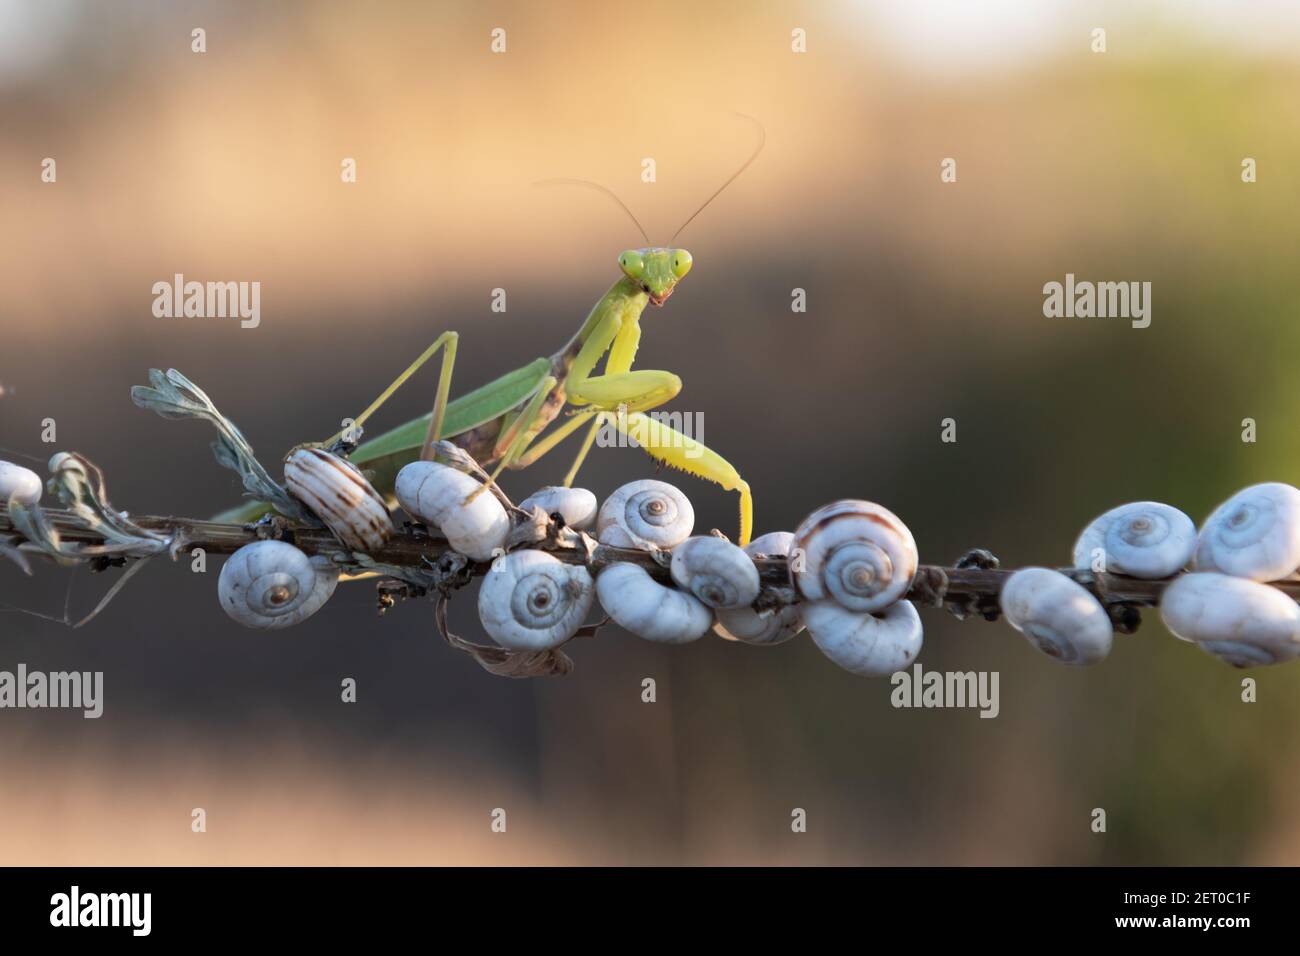 European Mantis religiosa or Praying Mantis on twig closeup. Macro shot. Insect photography Stock Photo